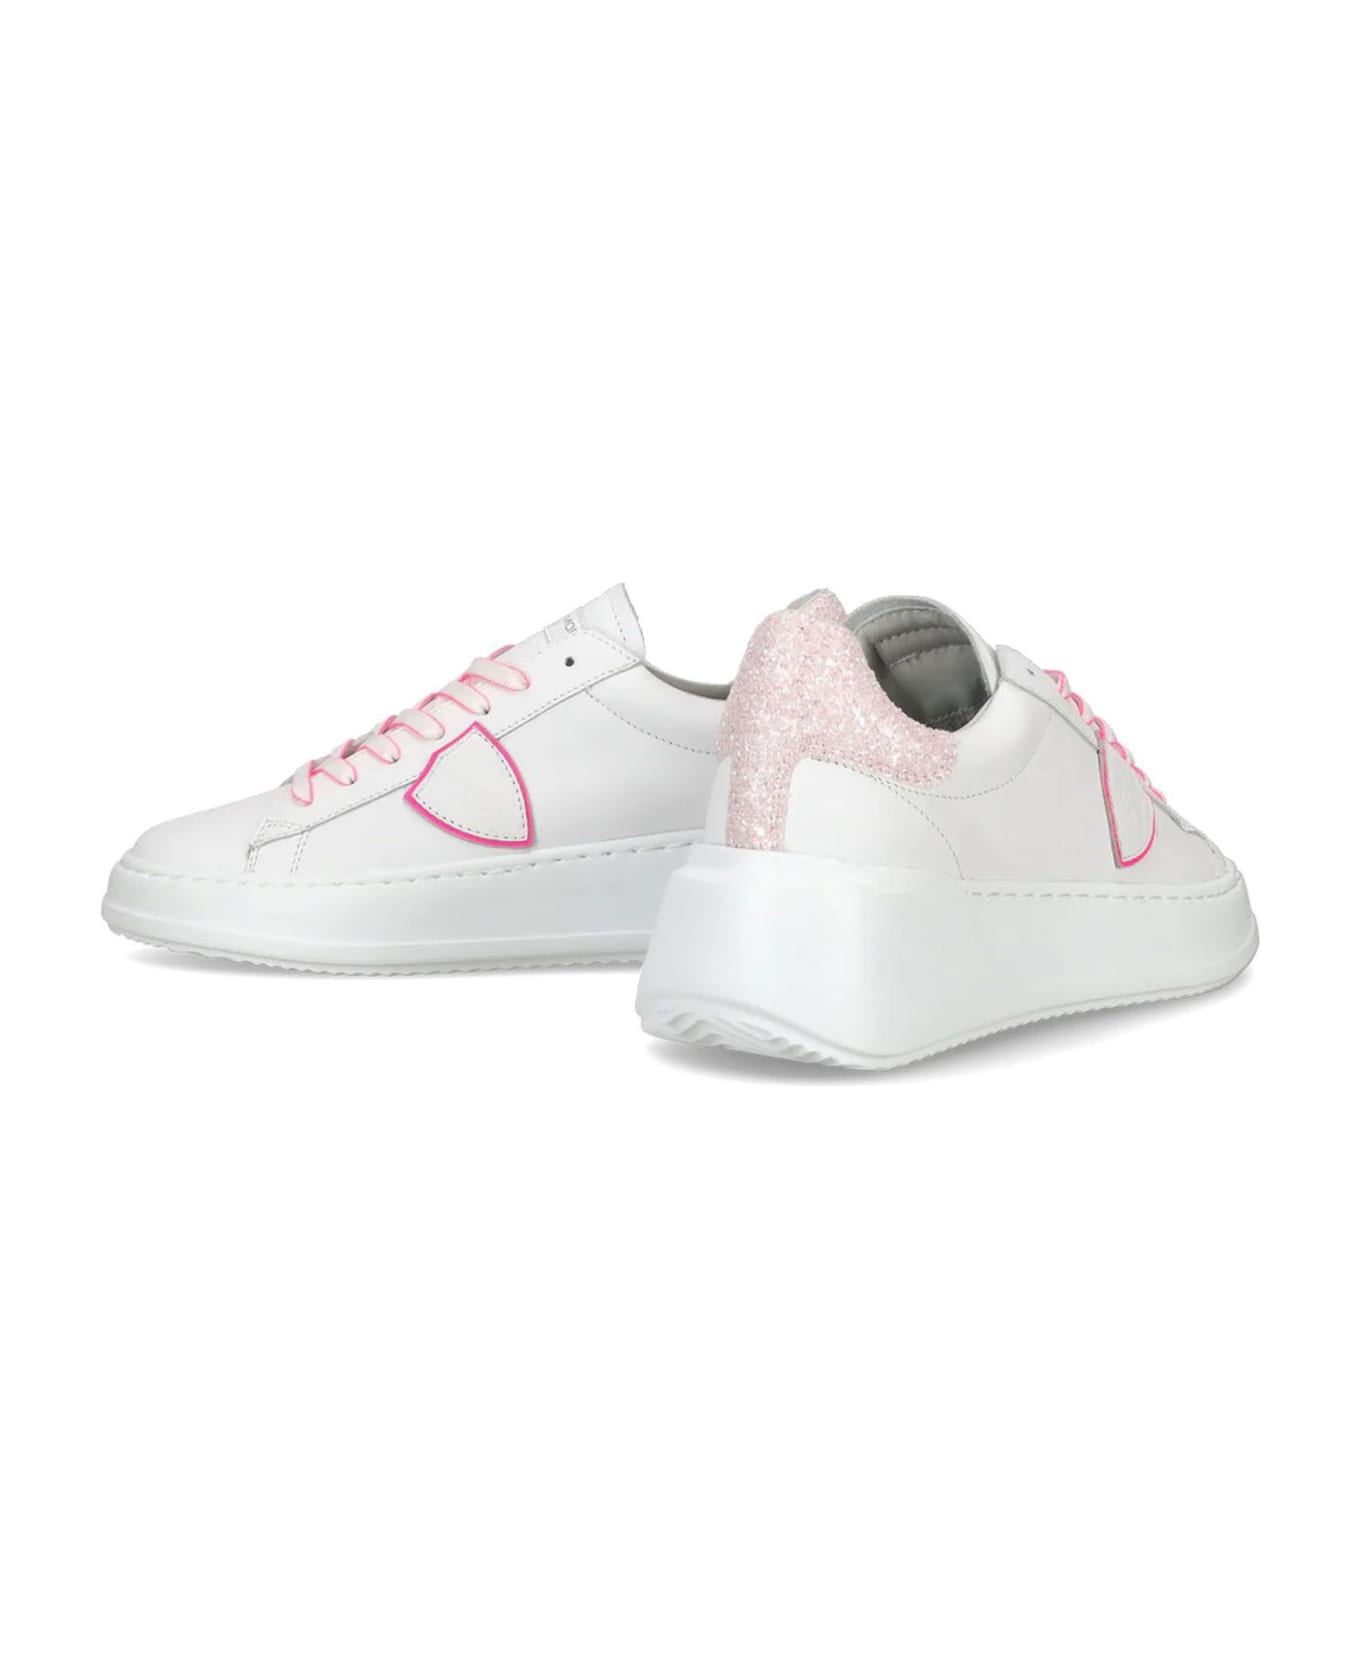 Philippe Model Tres Temple Sneaker White And Fuchsia - White スニーカー